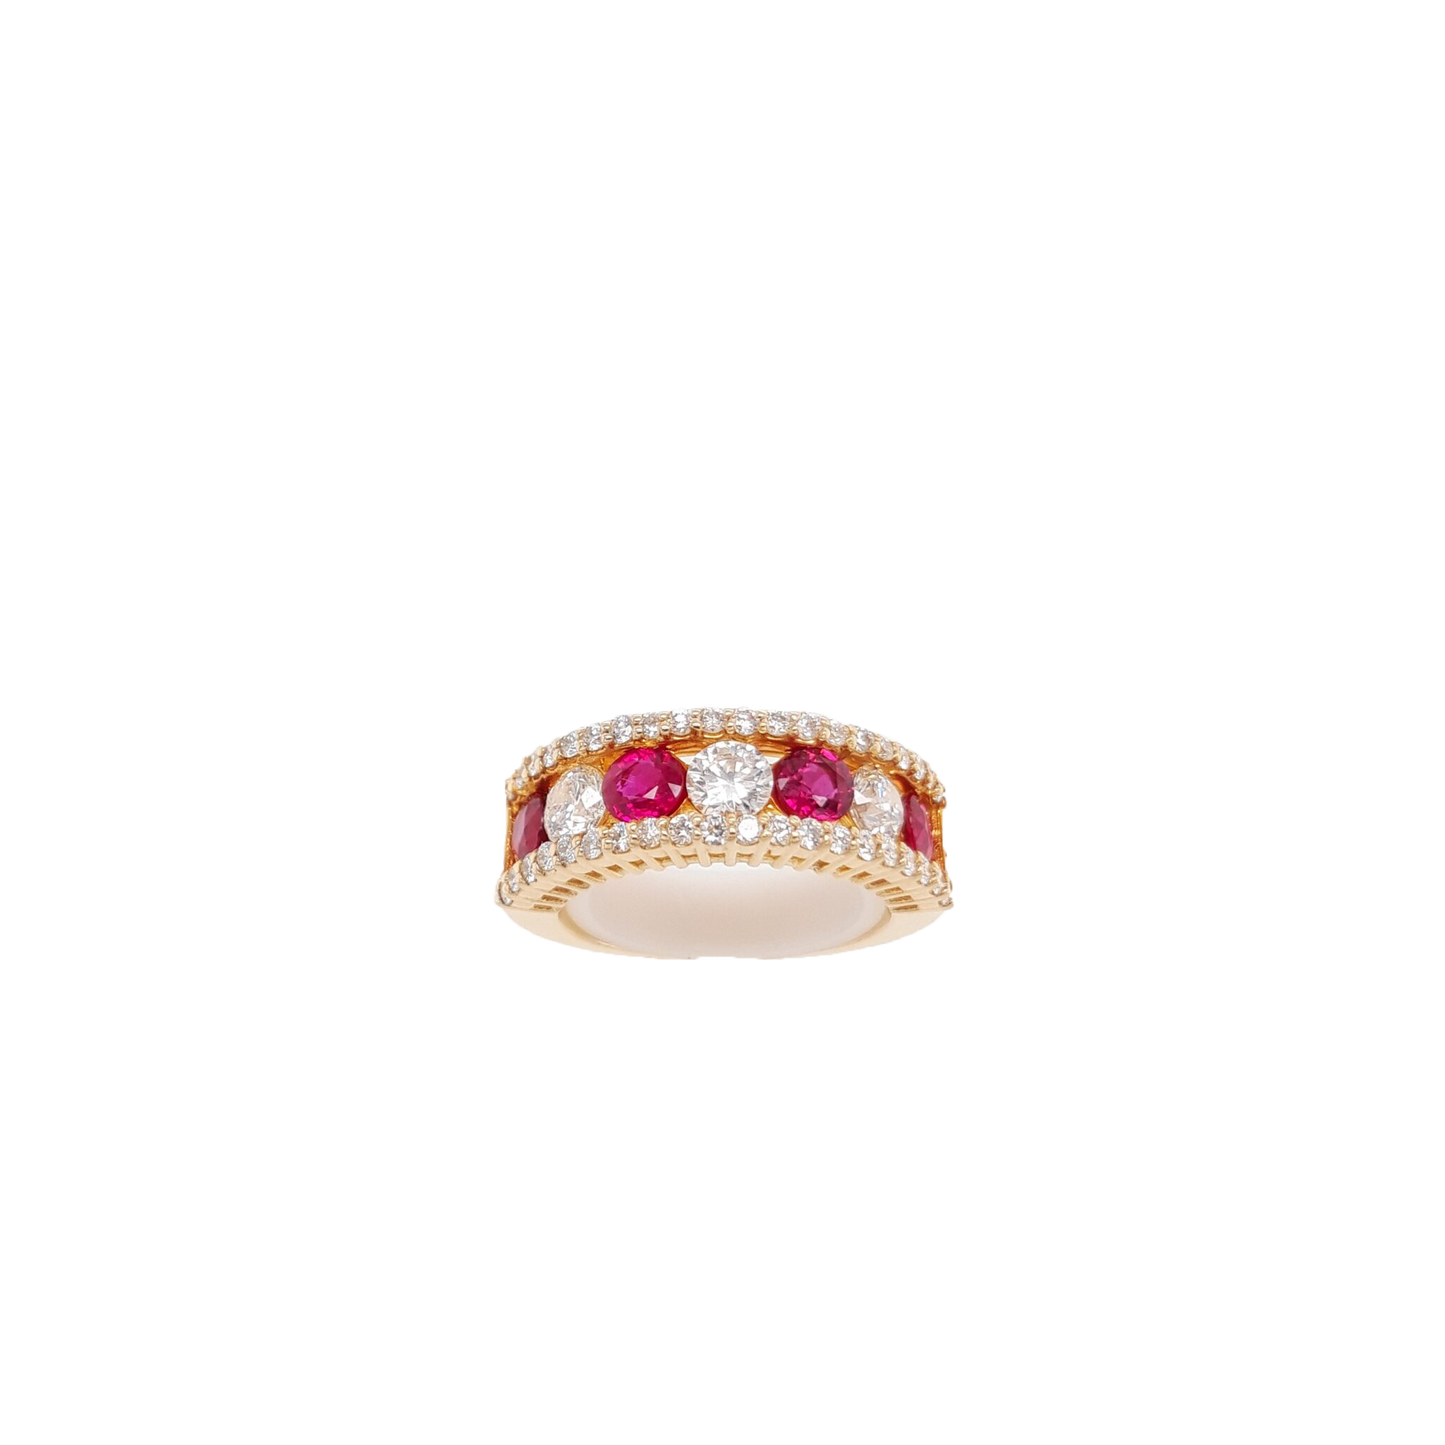 Ladies Diamond Ring With Rubies 1.33 Carats